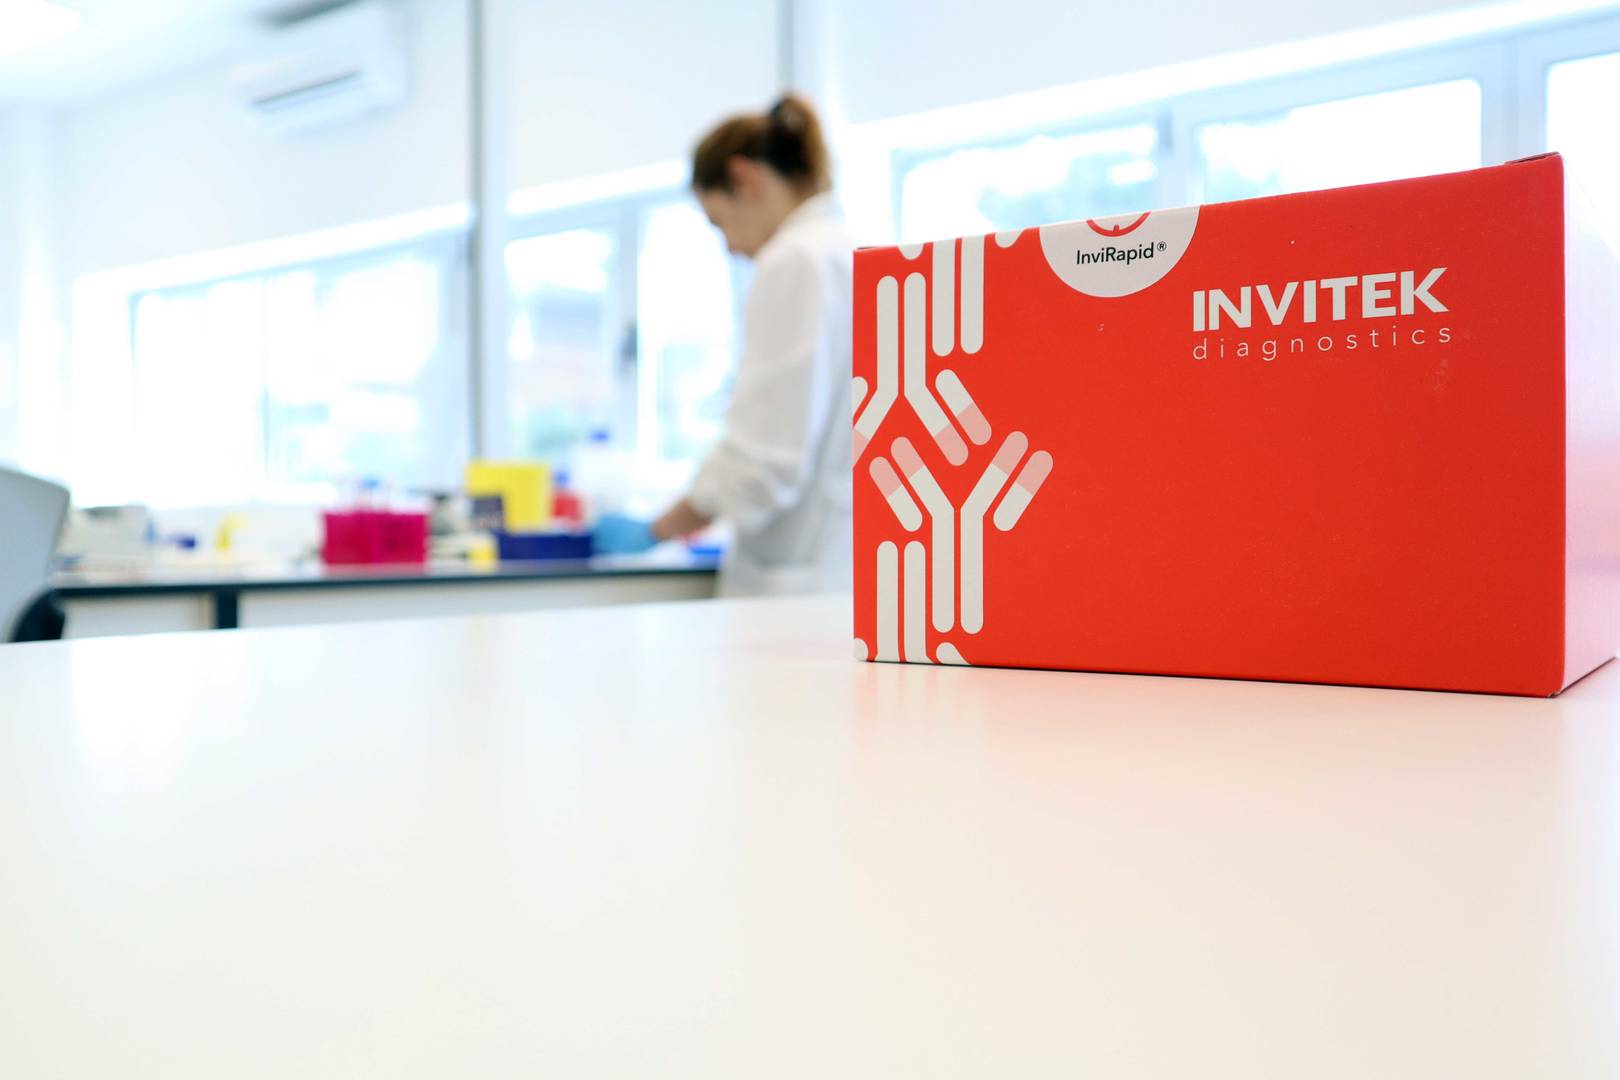 InviRapid product box in lab